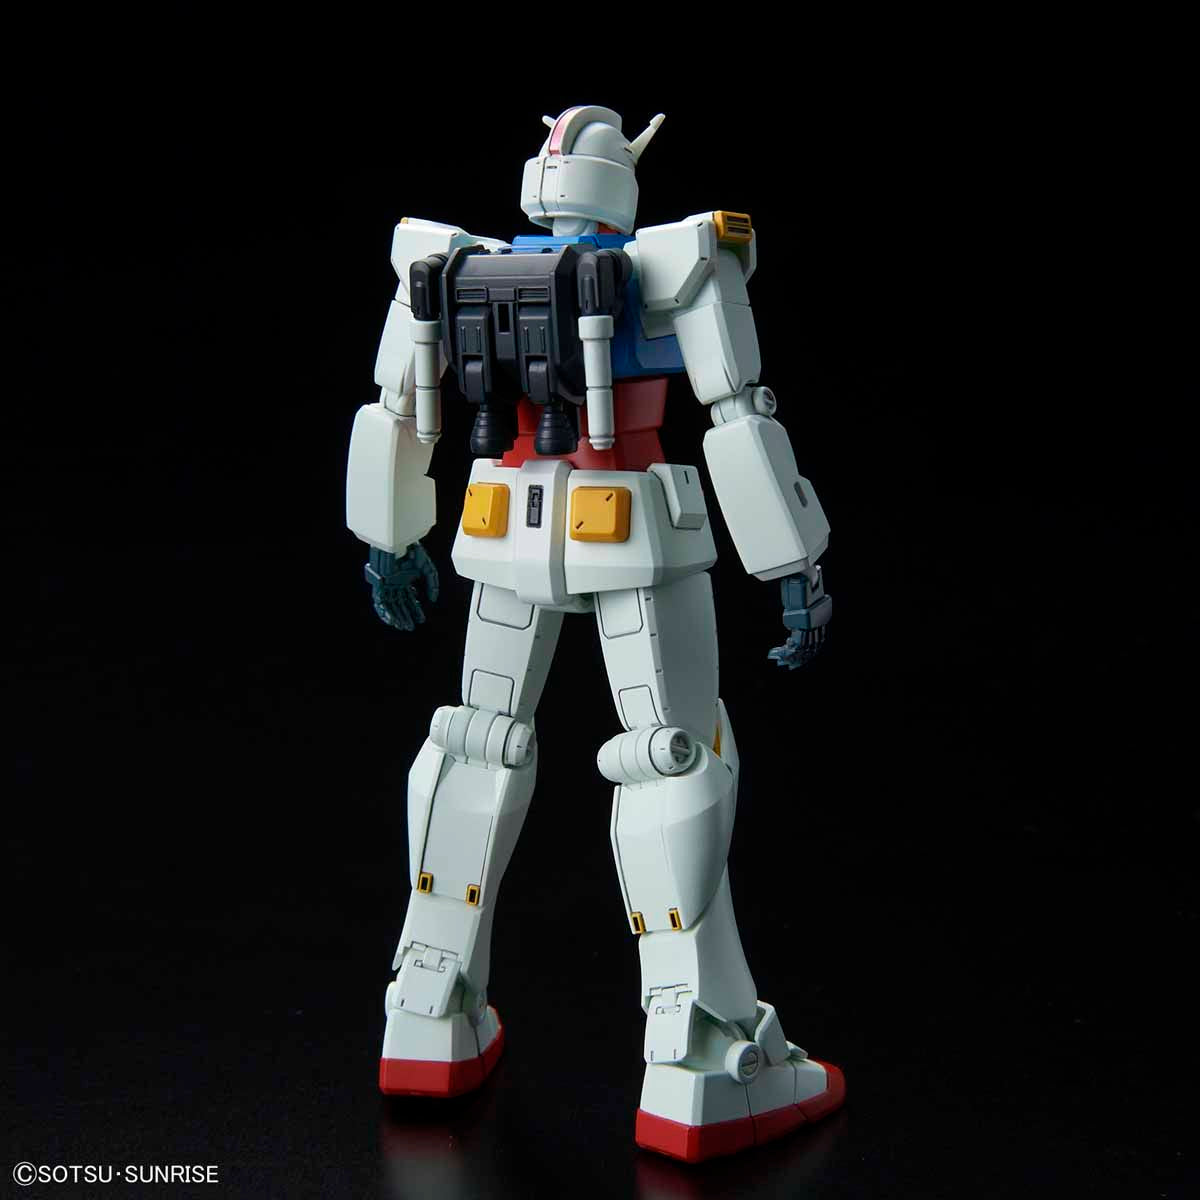 HGUC - Gundam G40 (Industrial Design Ver.)